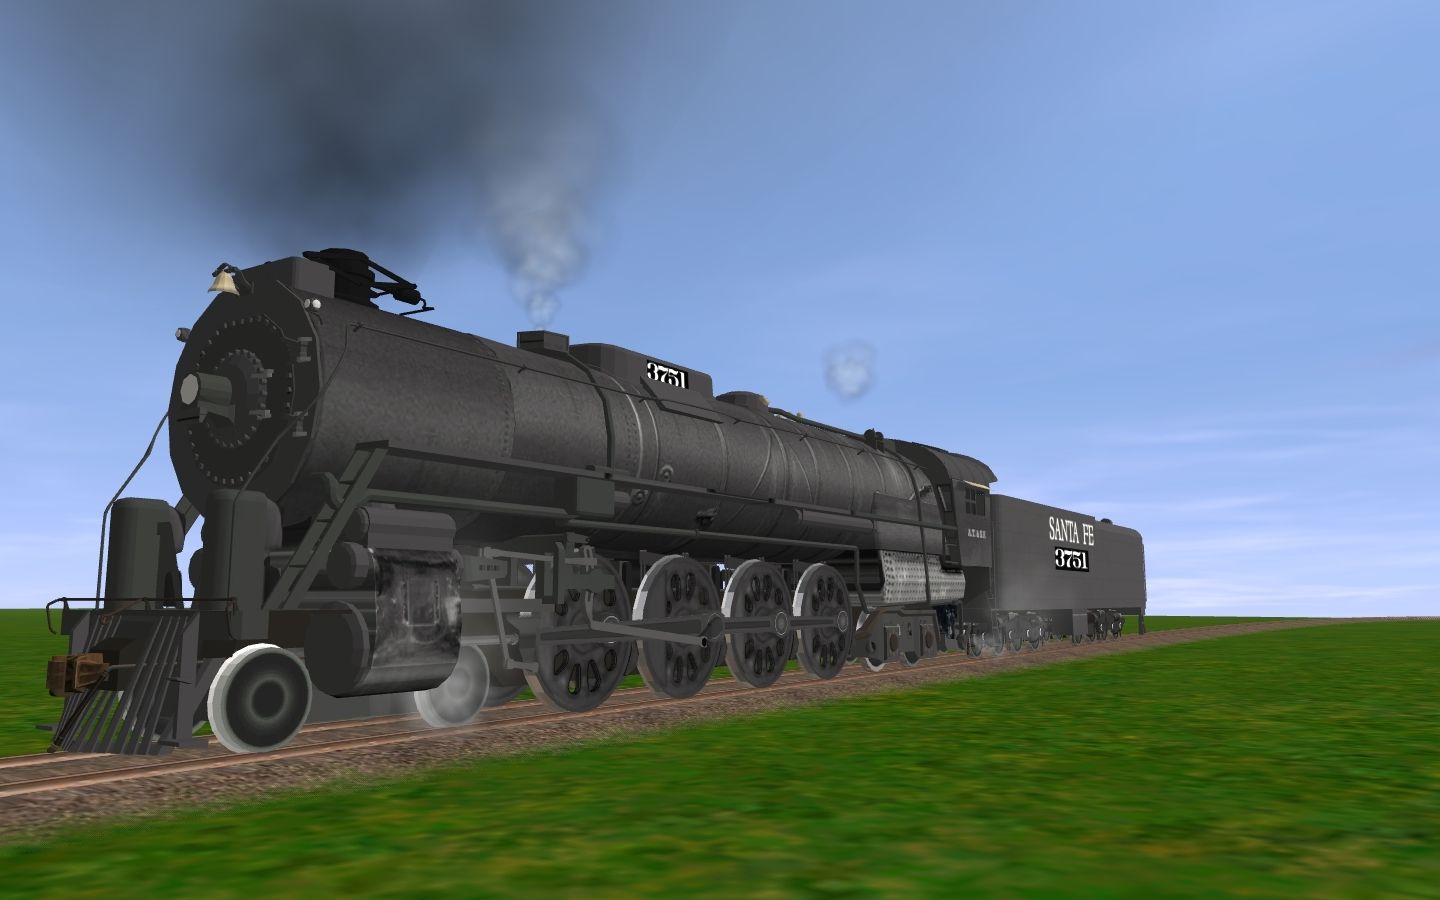 My-first-steam-locomotive-reskin%2C-the-ATSF-3751.jpg